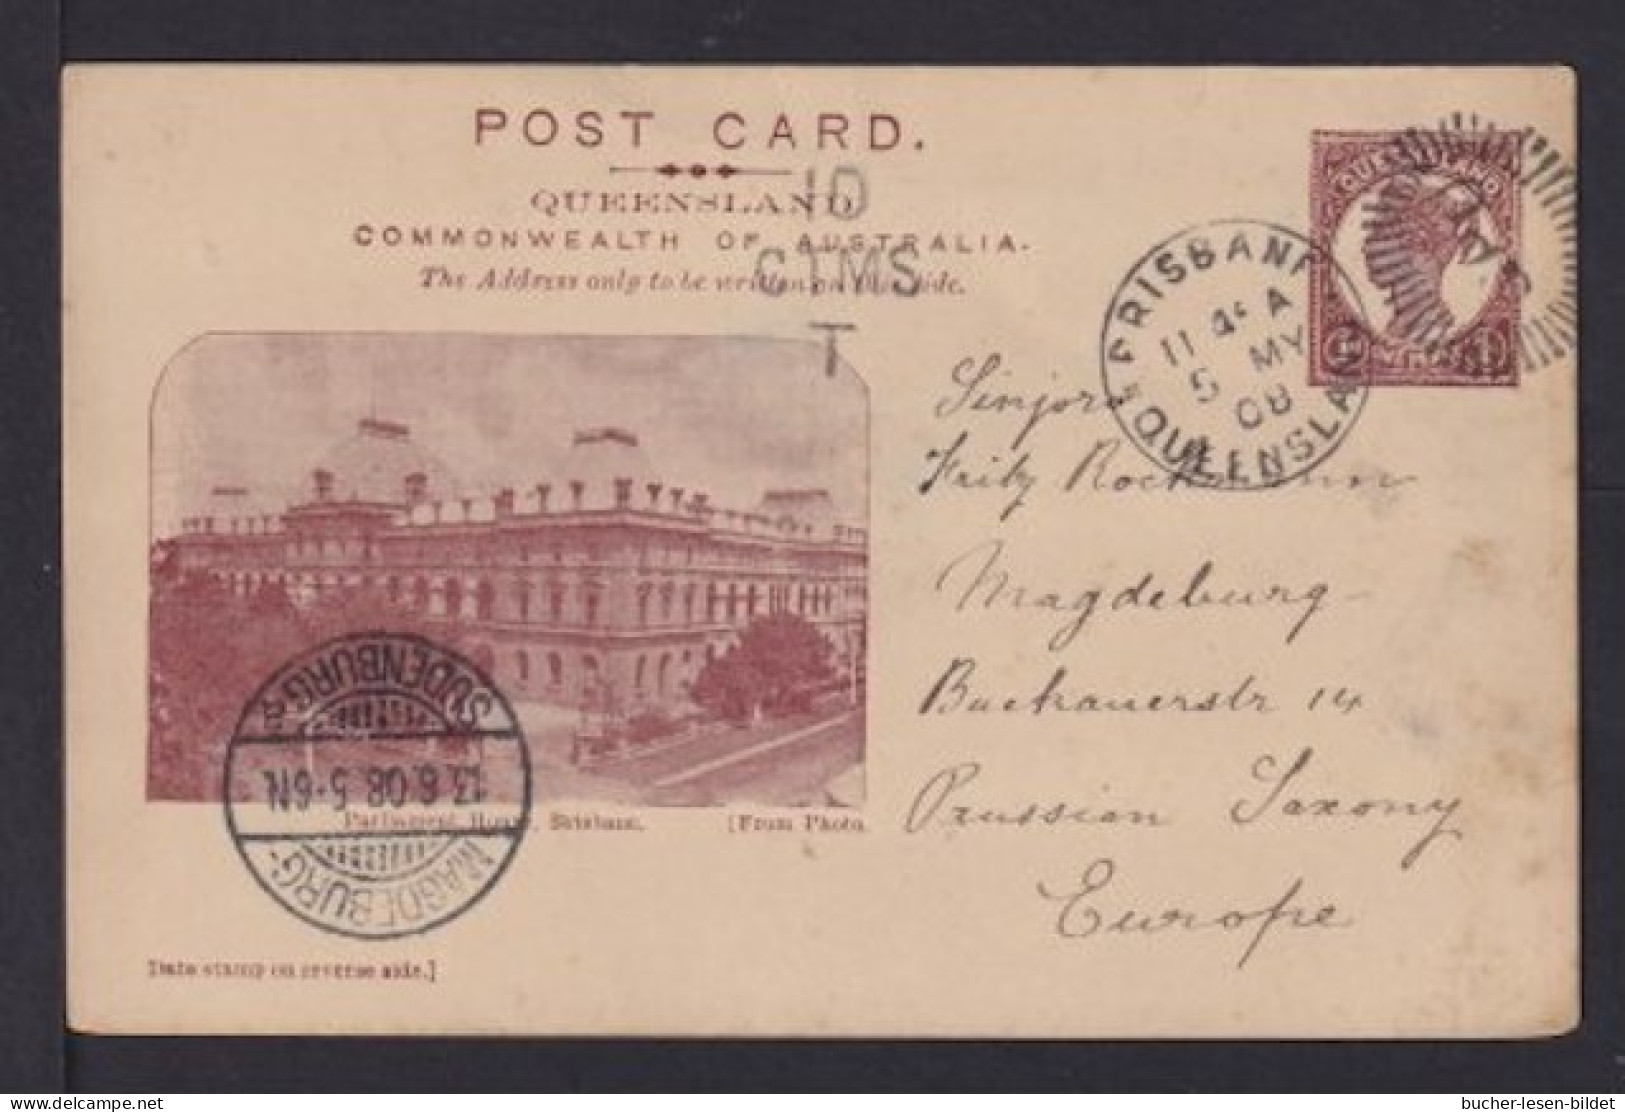 1908 - 1 P. Bild Ganzsache "Parlament House" Ab Brisbane Nach Magdeburg - Stempel "10/CTMS/T" - Brieven En Documenten